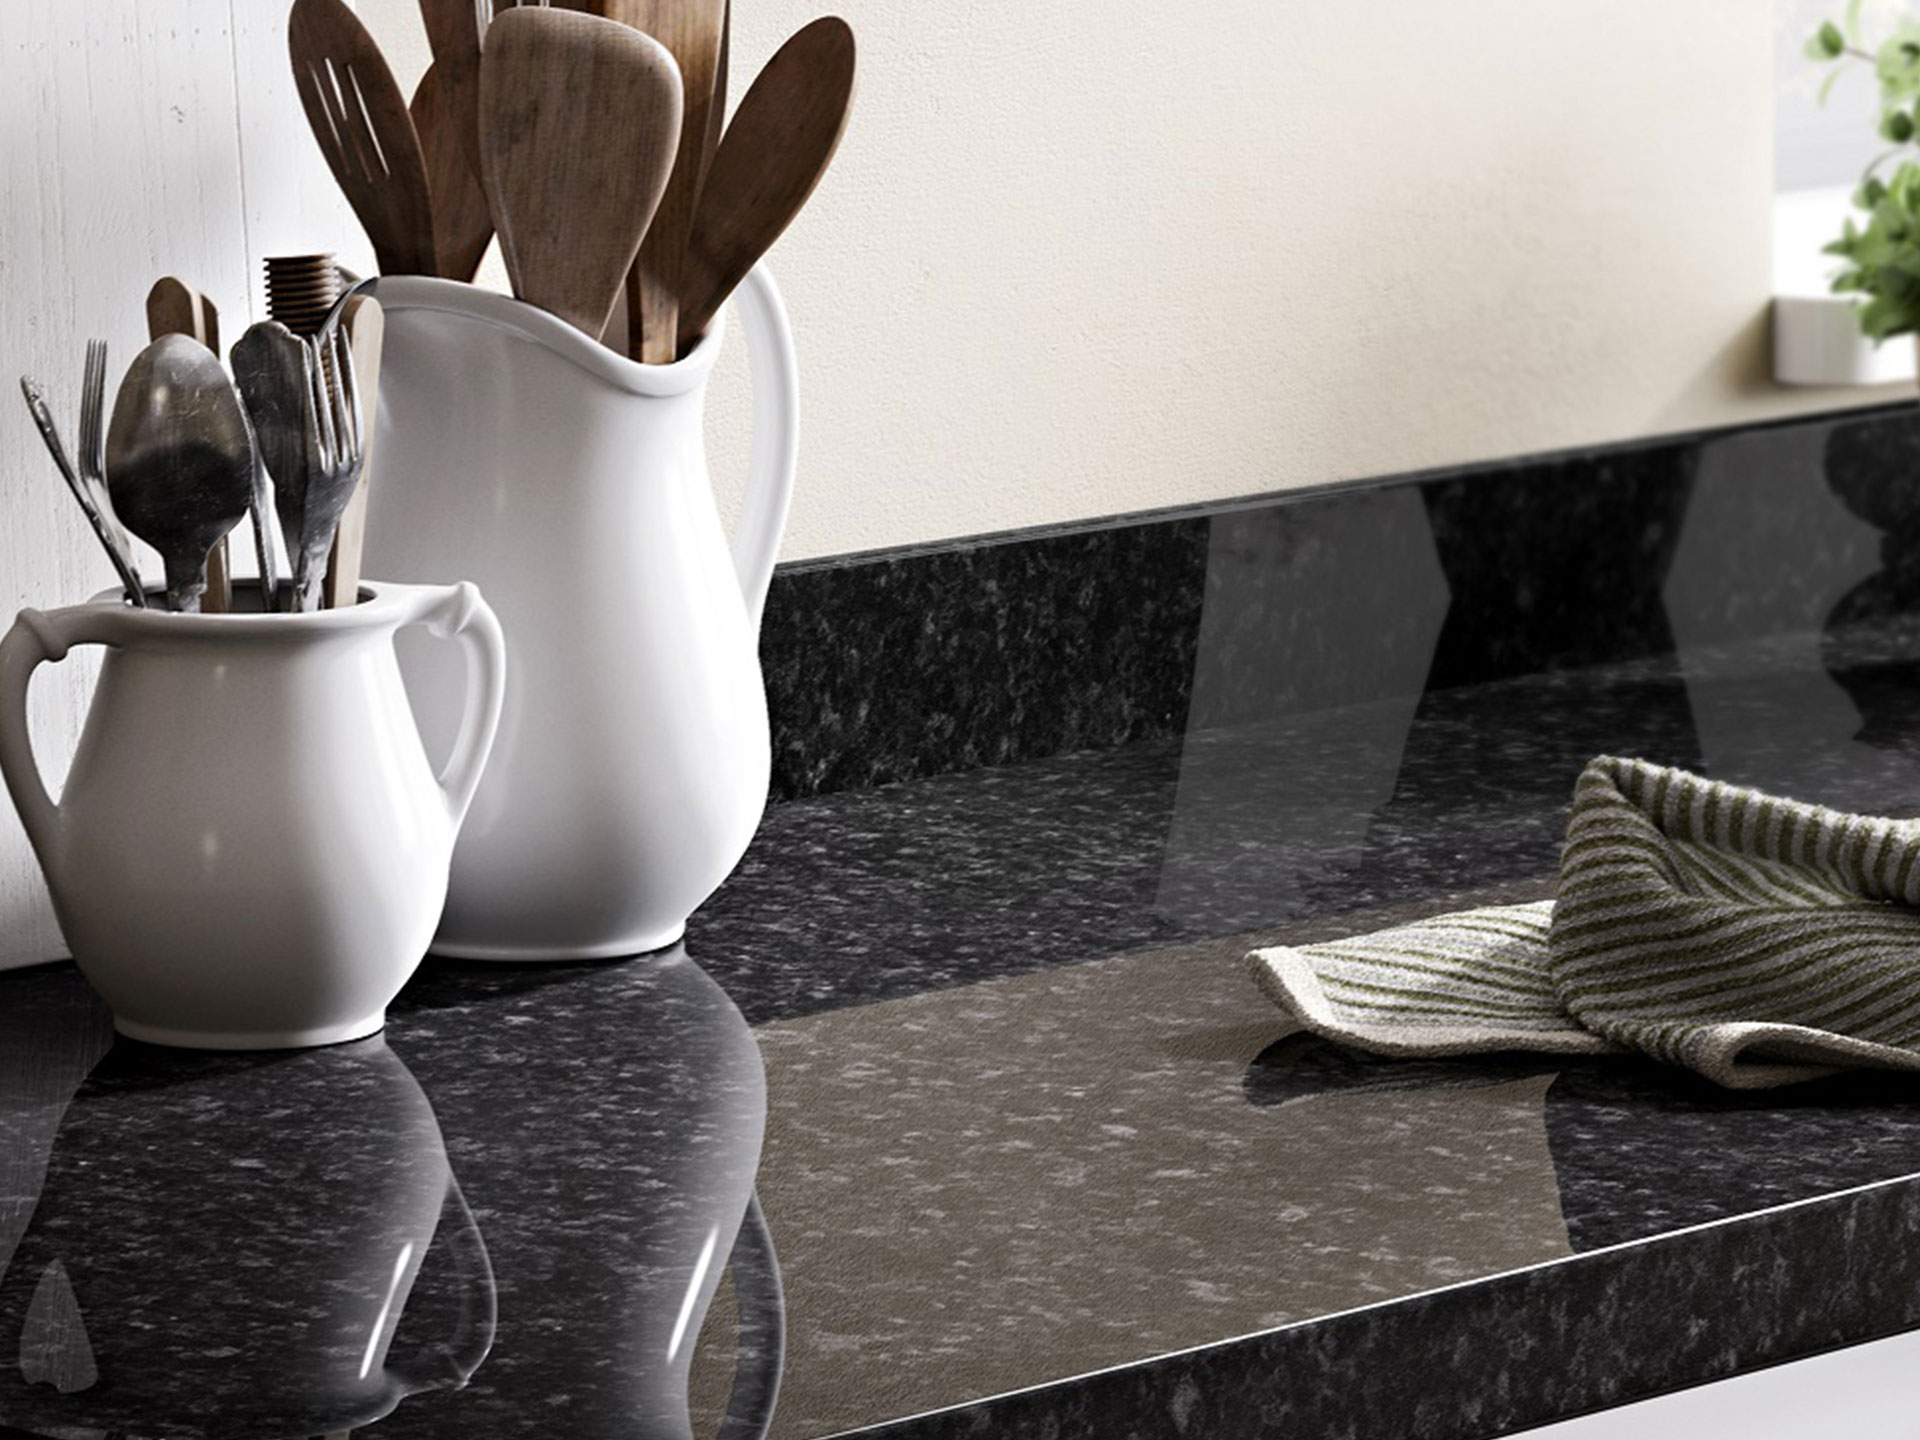 Sleek and shiny, polished granite will make your kitchen super stylish